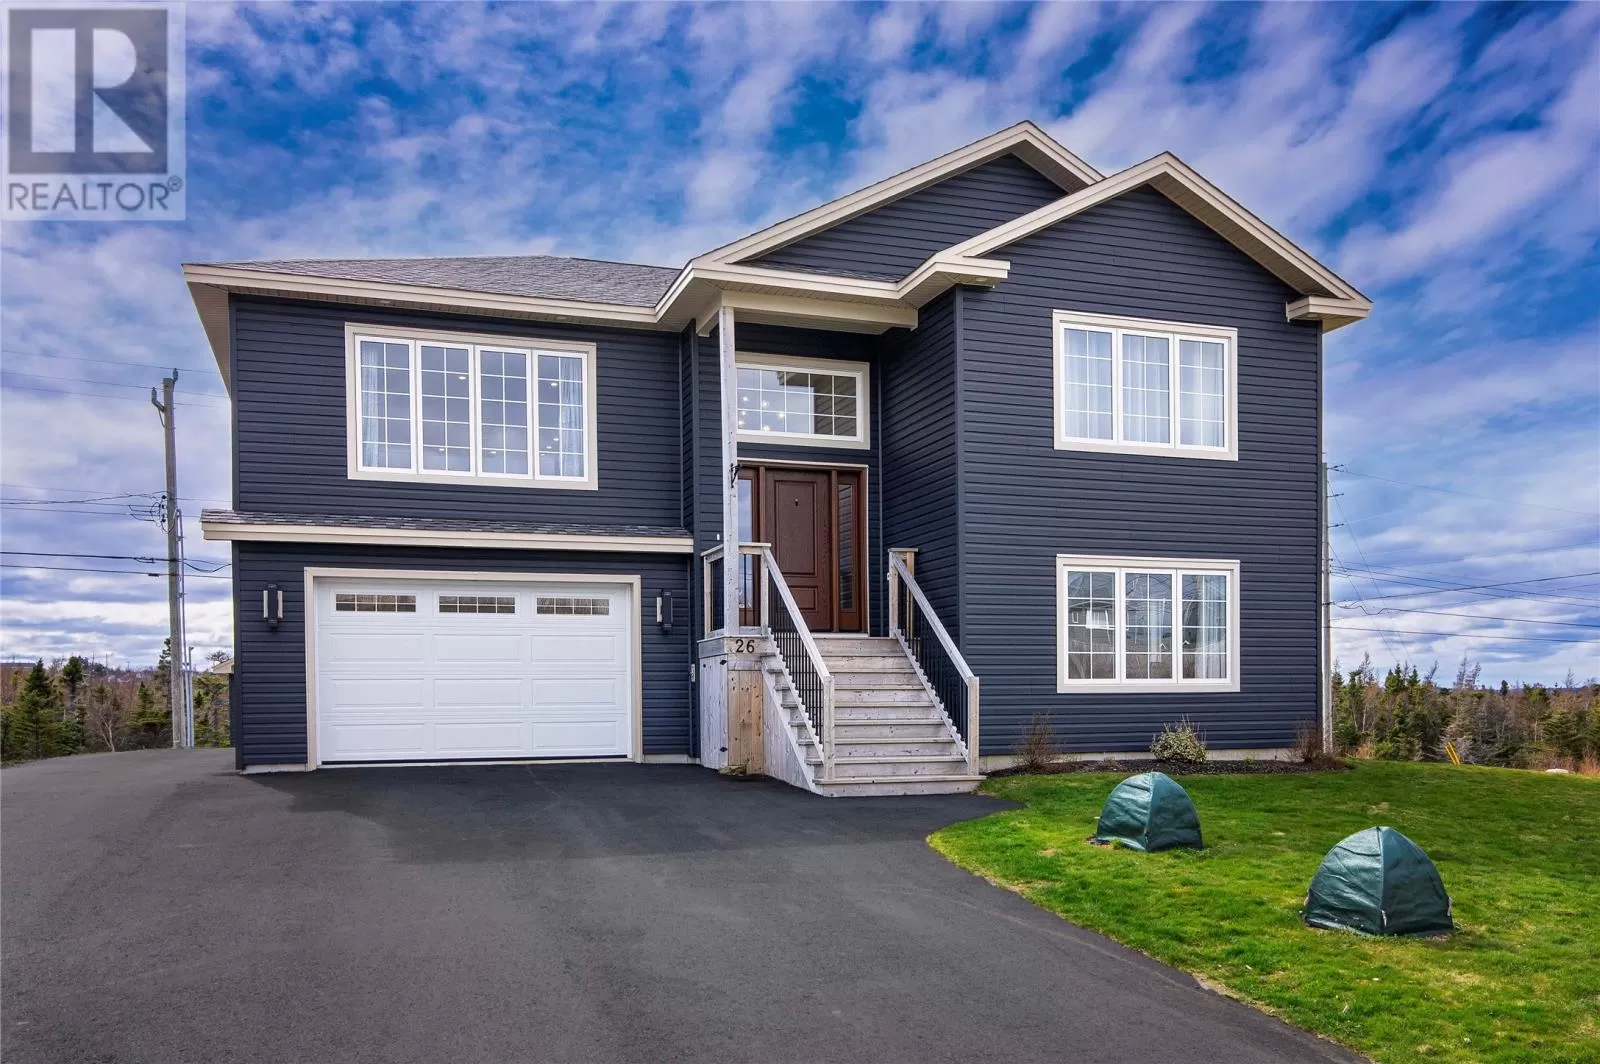 House for rent: 26 Dominic Drive, Conception Bay South, Newfoundland & Labrador A1X 0J9